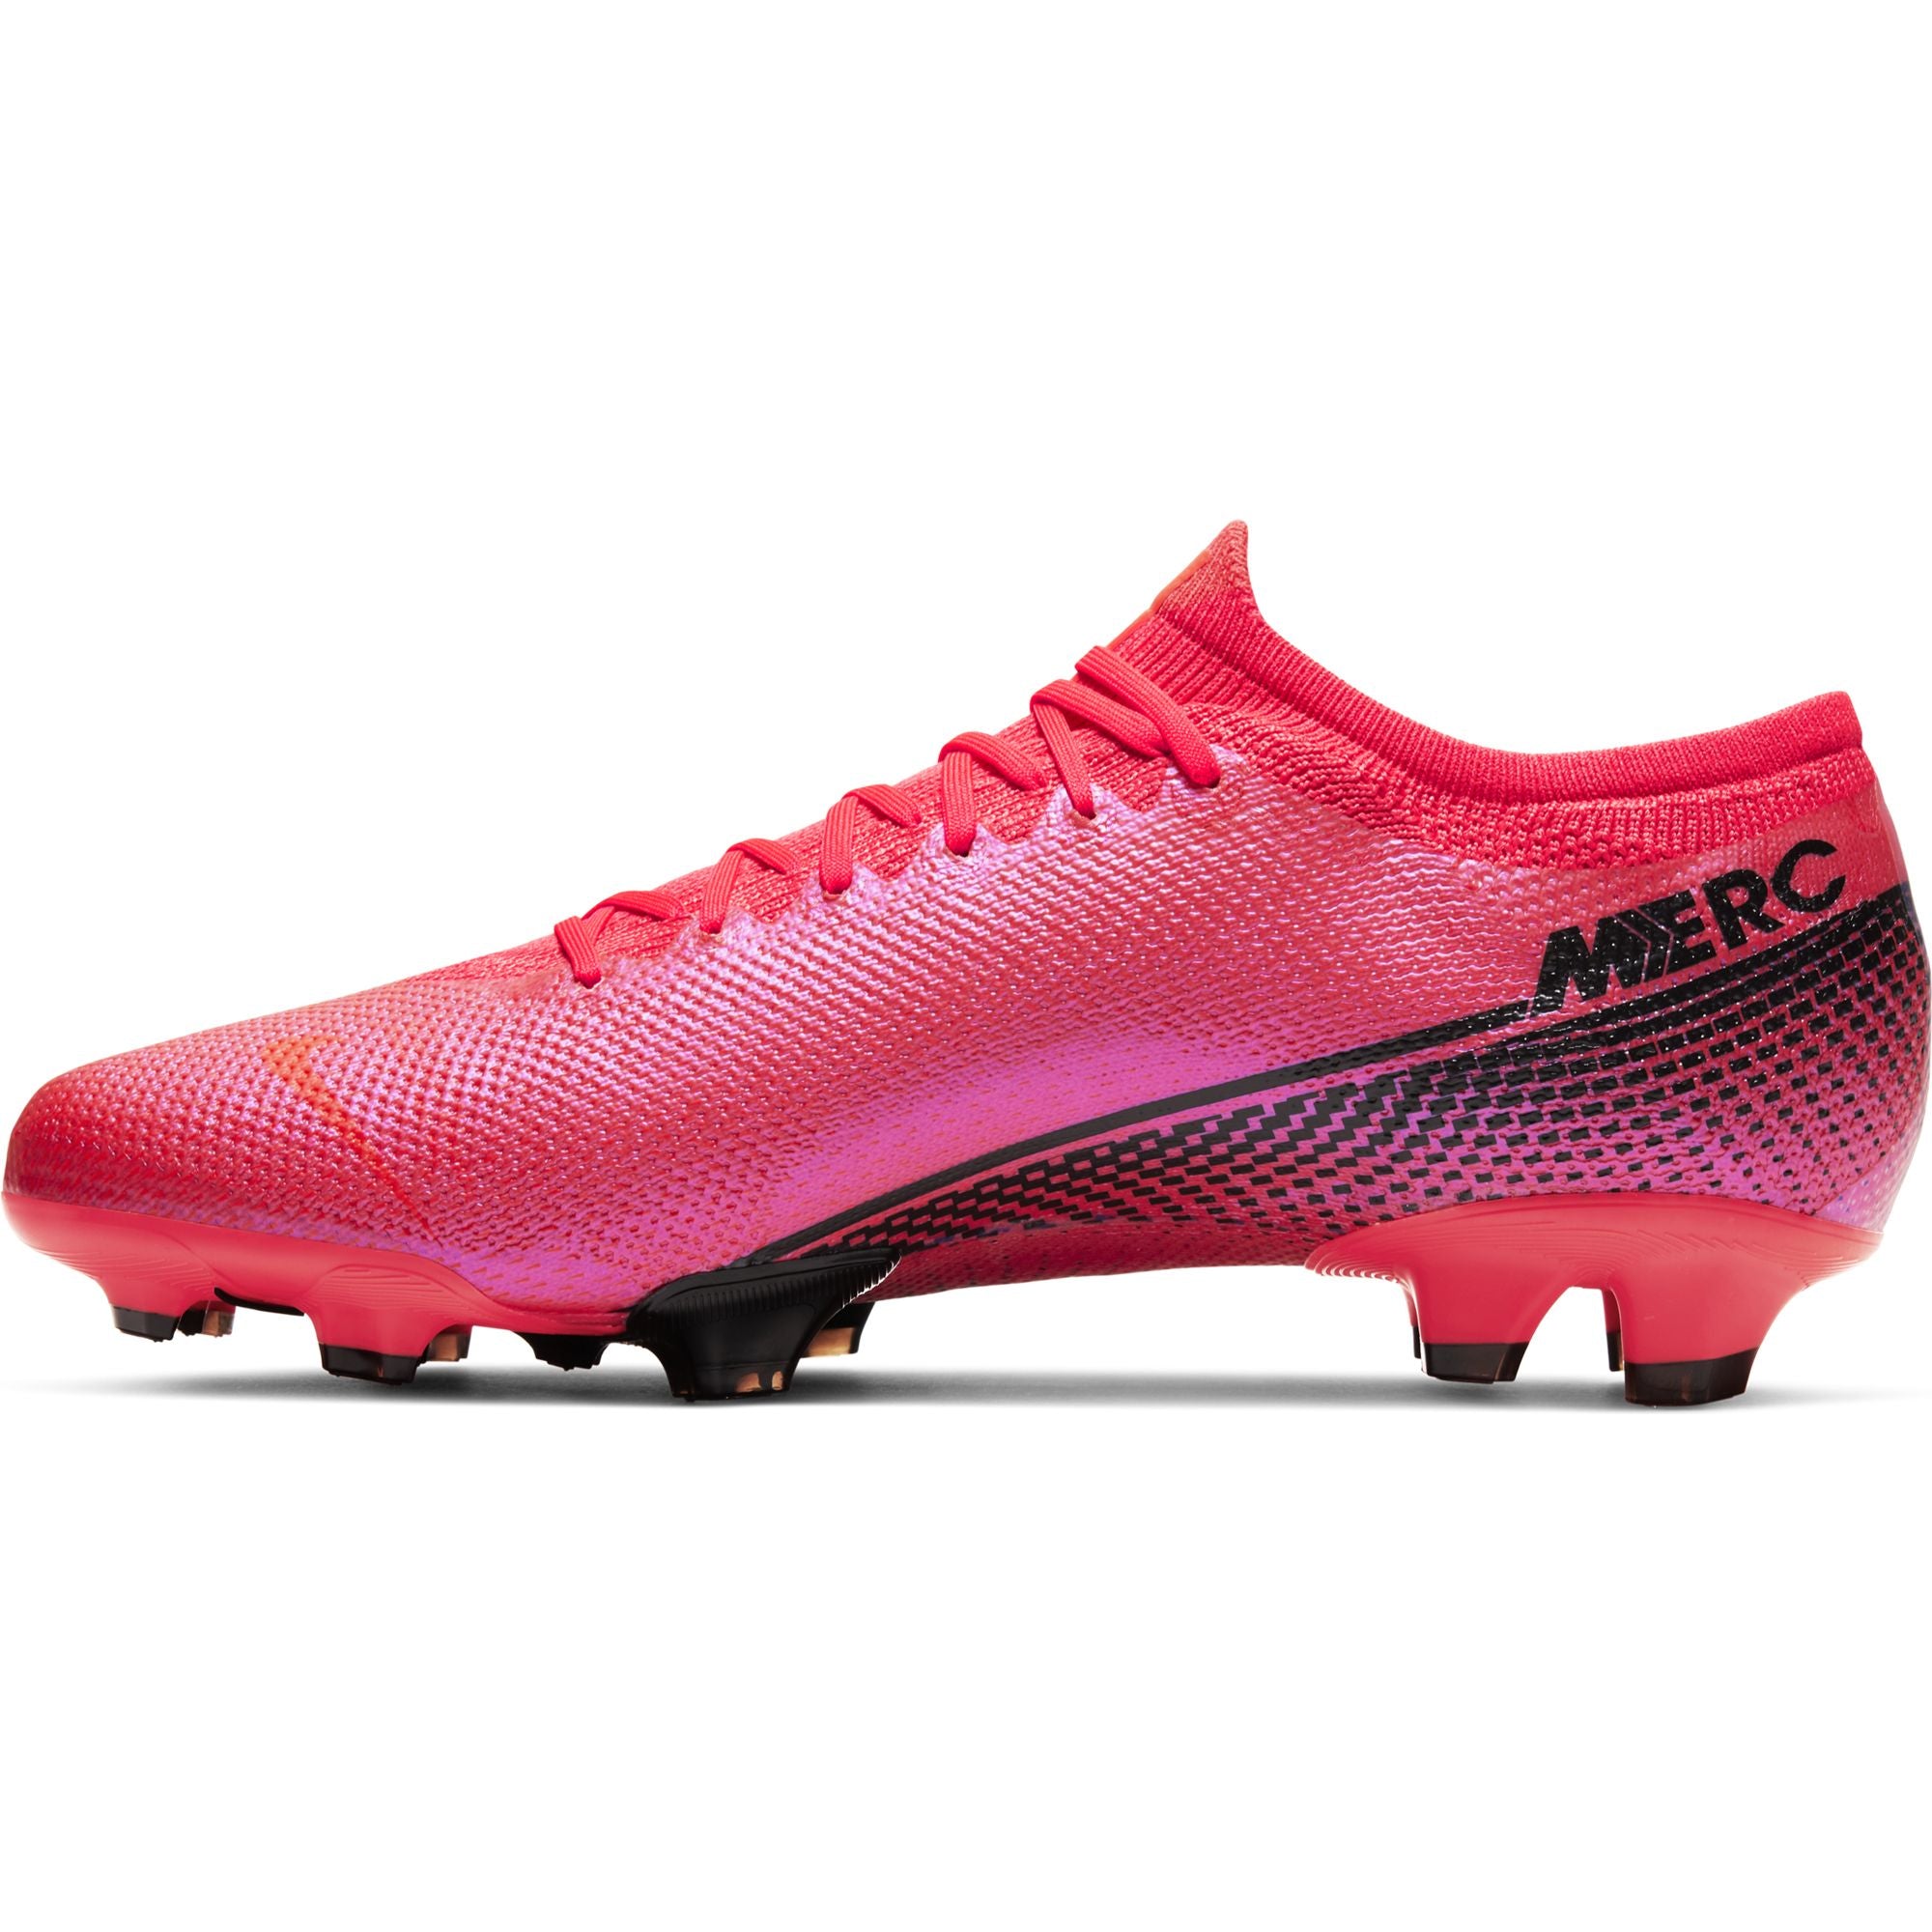 Nike Mercurial Vapor 13 360 Pro FG Soccer Cleats Football Boots Blue AT7901